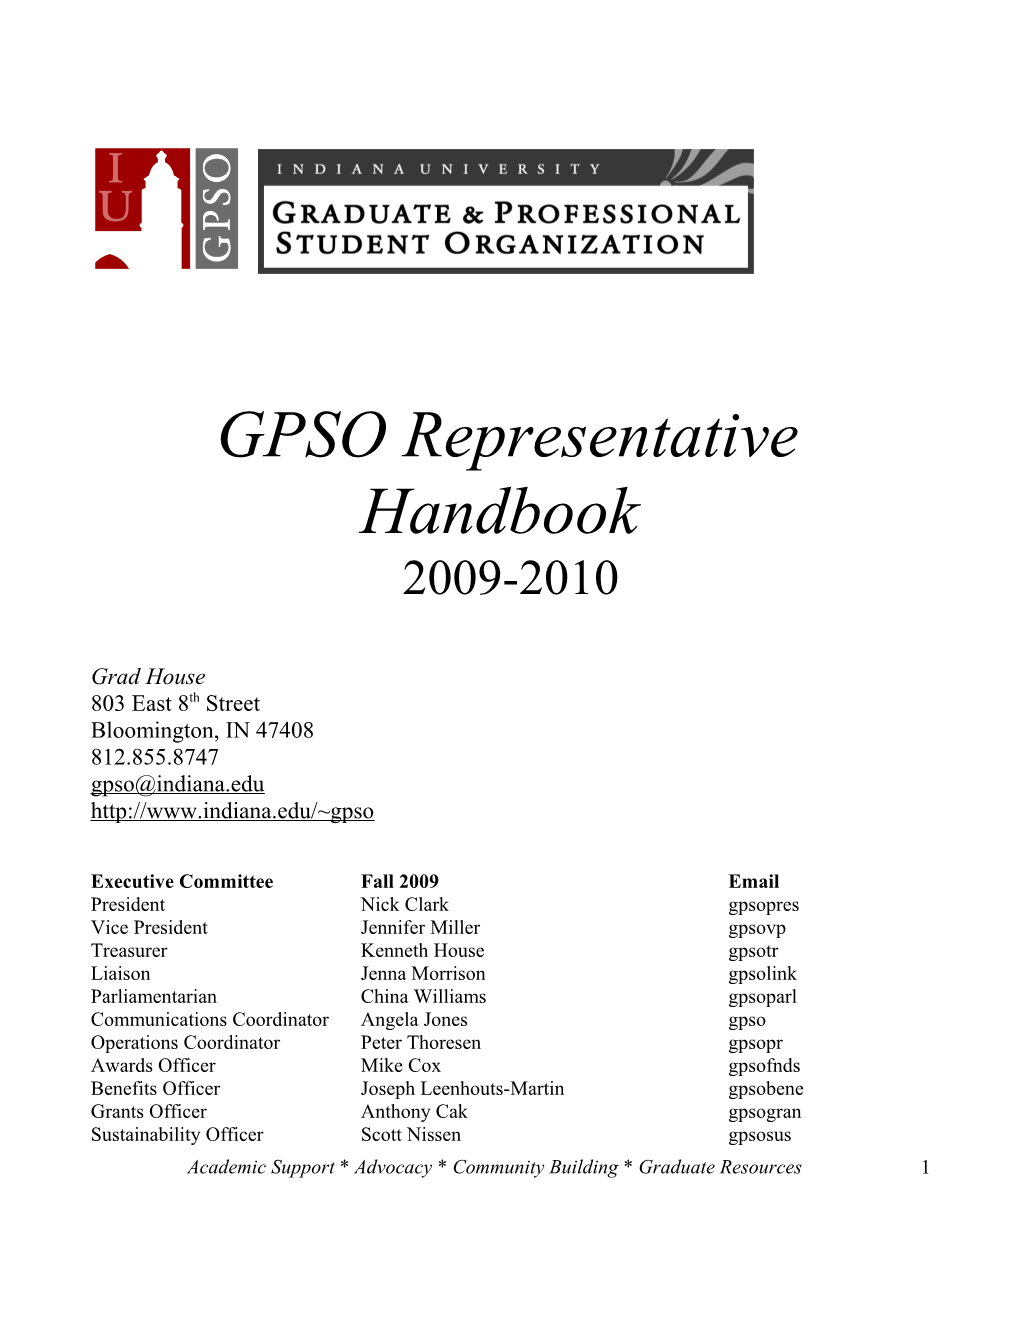 GPSO Representative Handbook